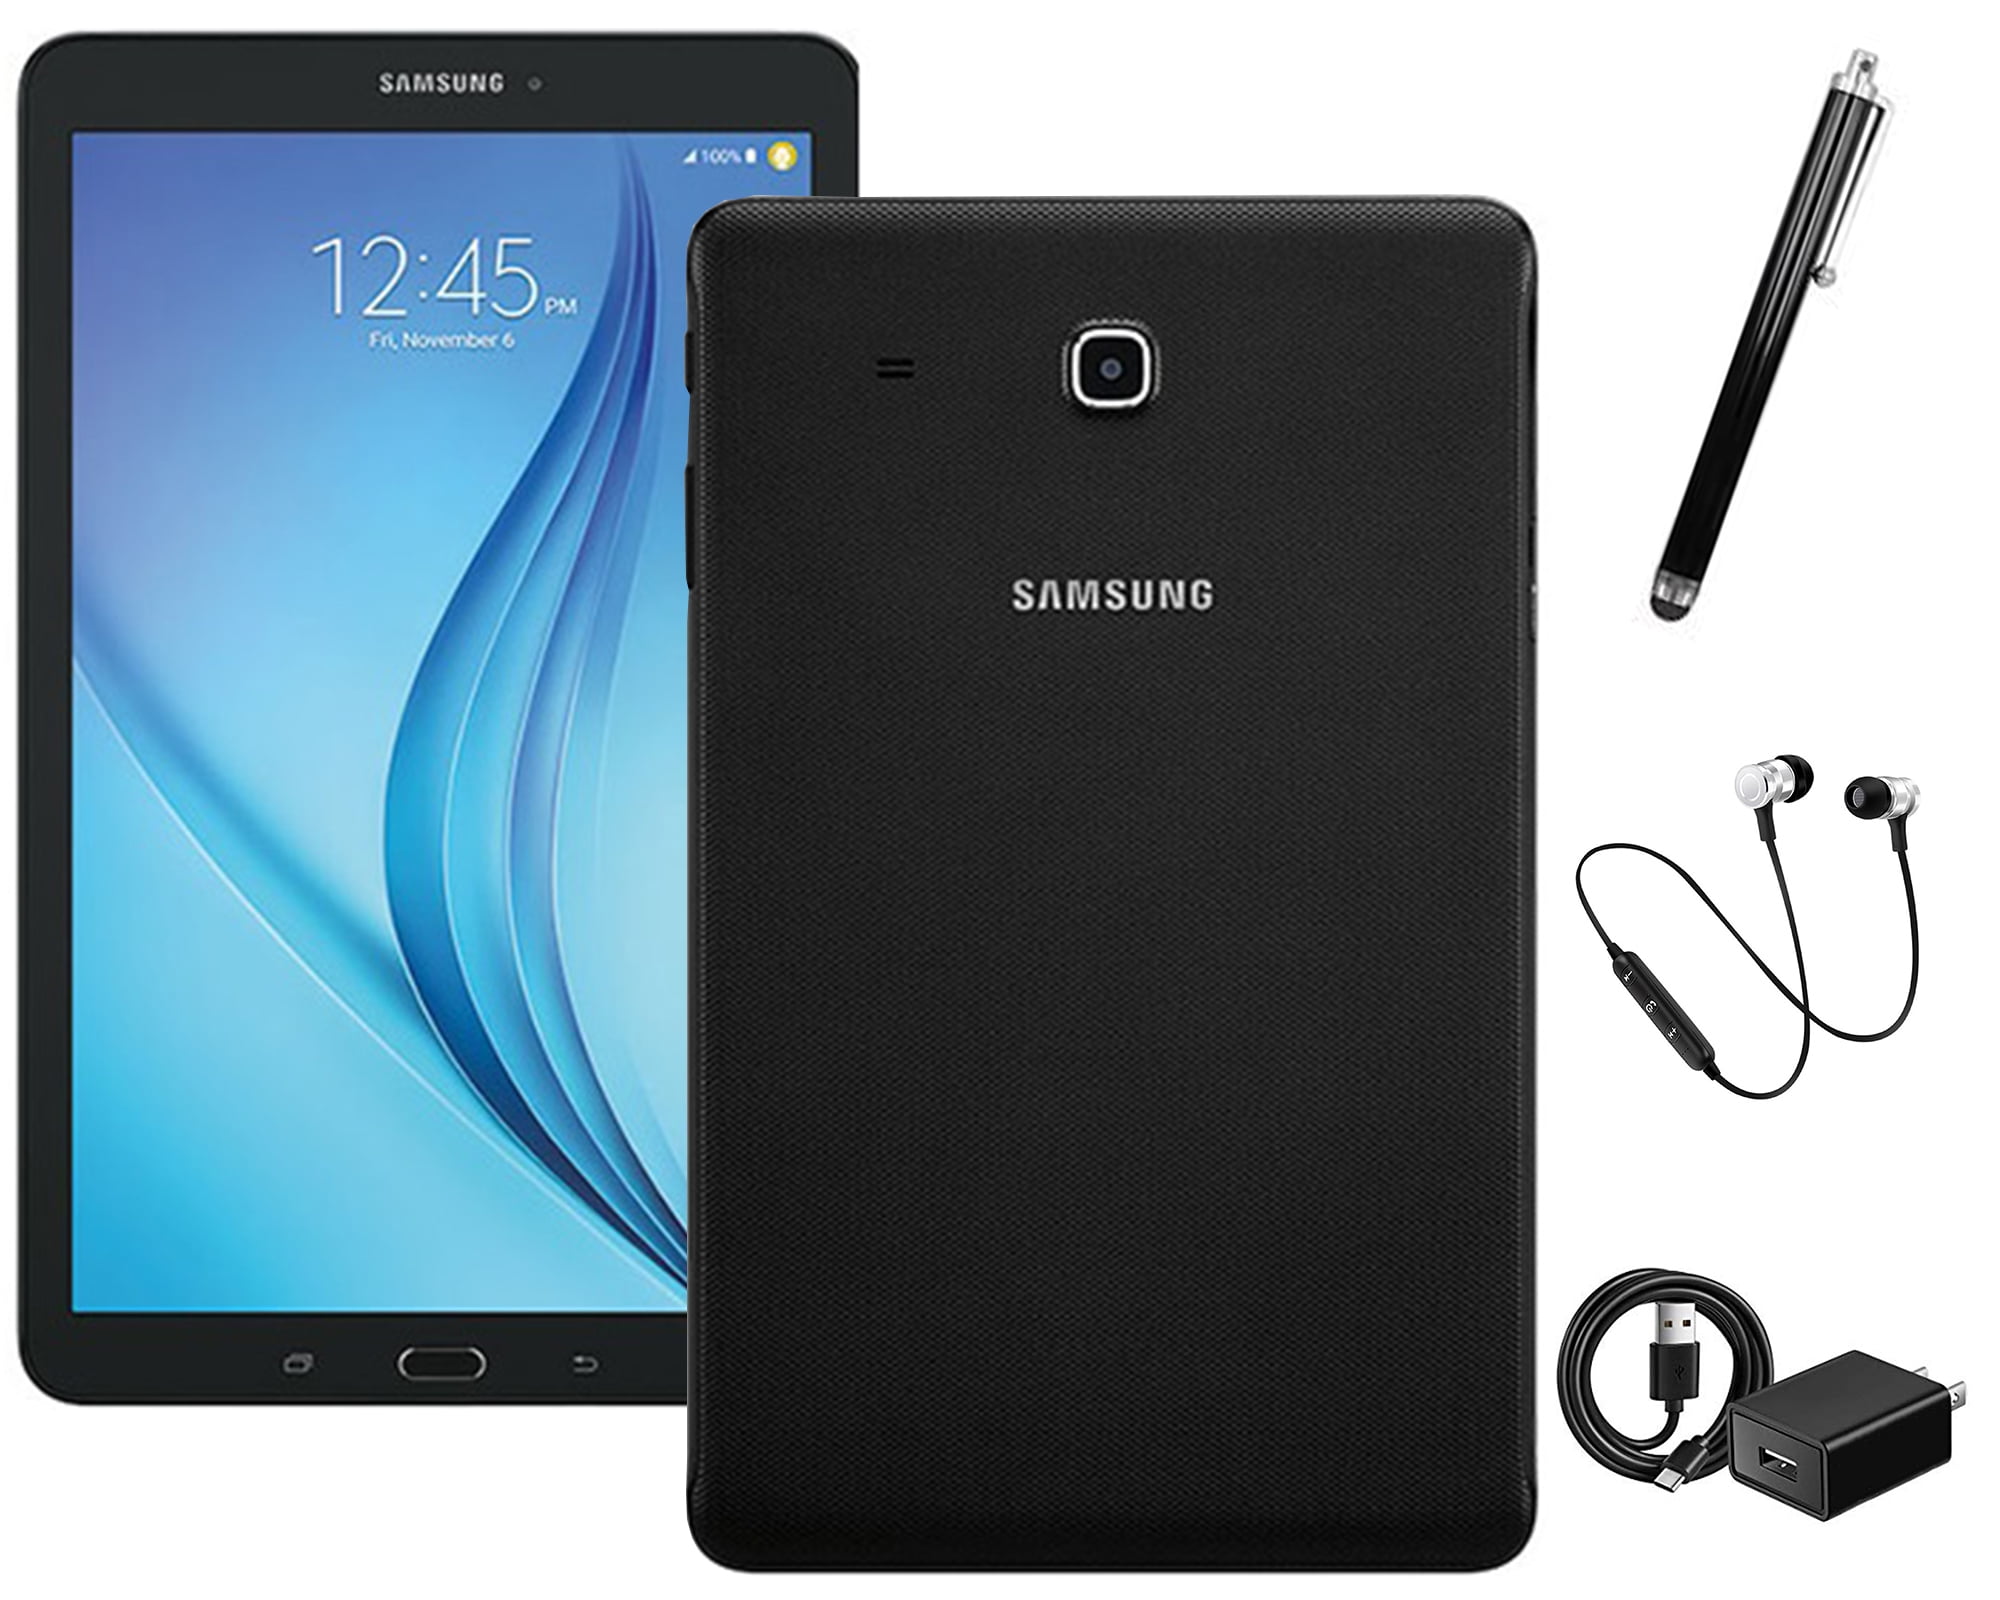 Voorzichtigheid Regelen Implementeren Samsung 8-inch Galaxy Tab E, Wi-Fi Only, 16GB, Bundle: Bluetooth Headset,  Stylus Pen - Black - Walmart.com